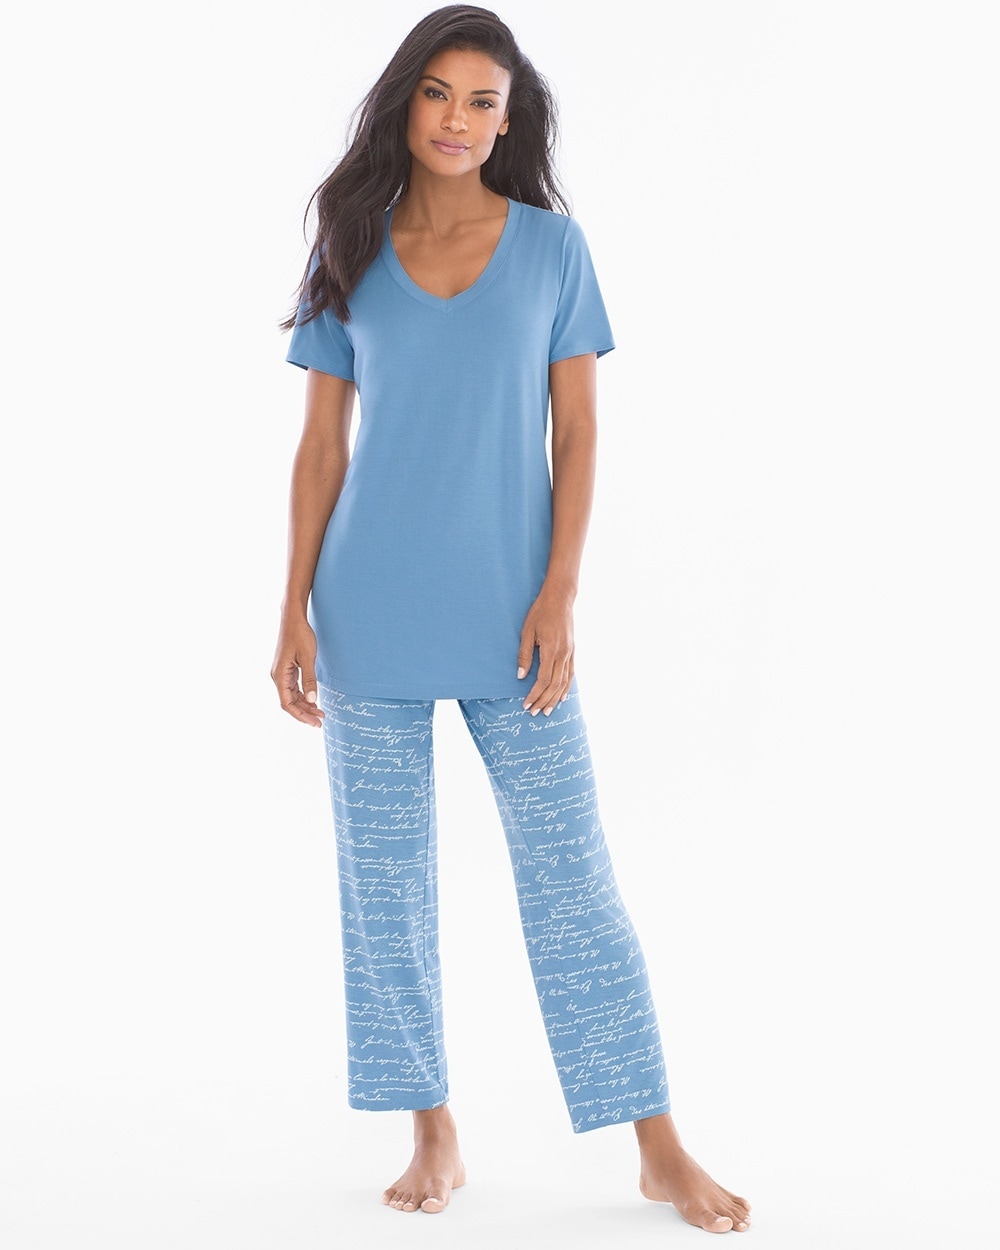 Cool Nights Short Sleeve-Ankle Pants Pajama Set